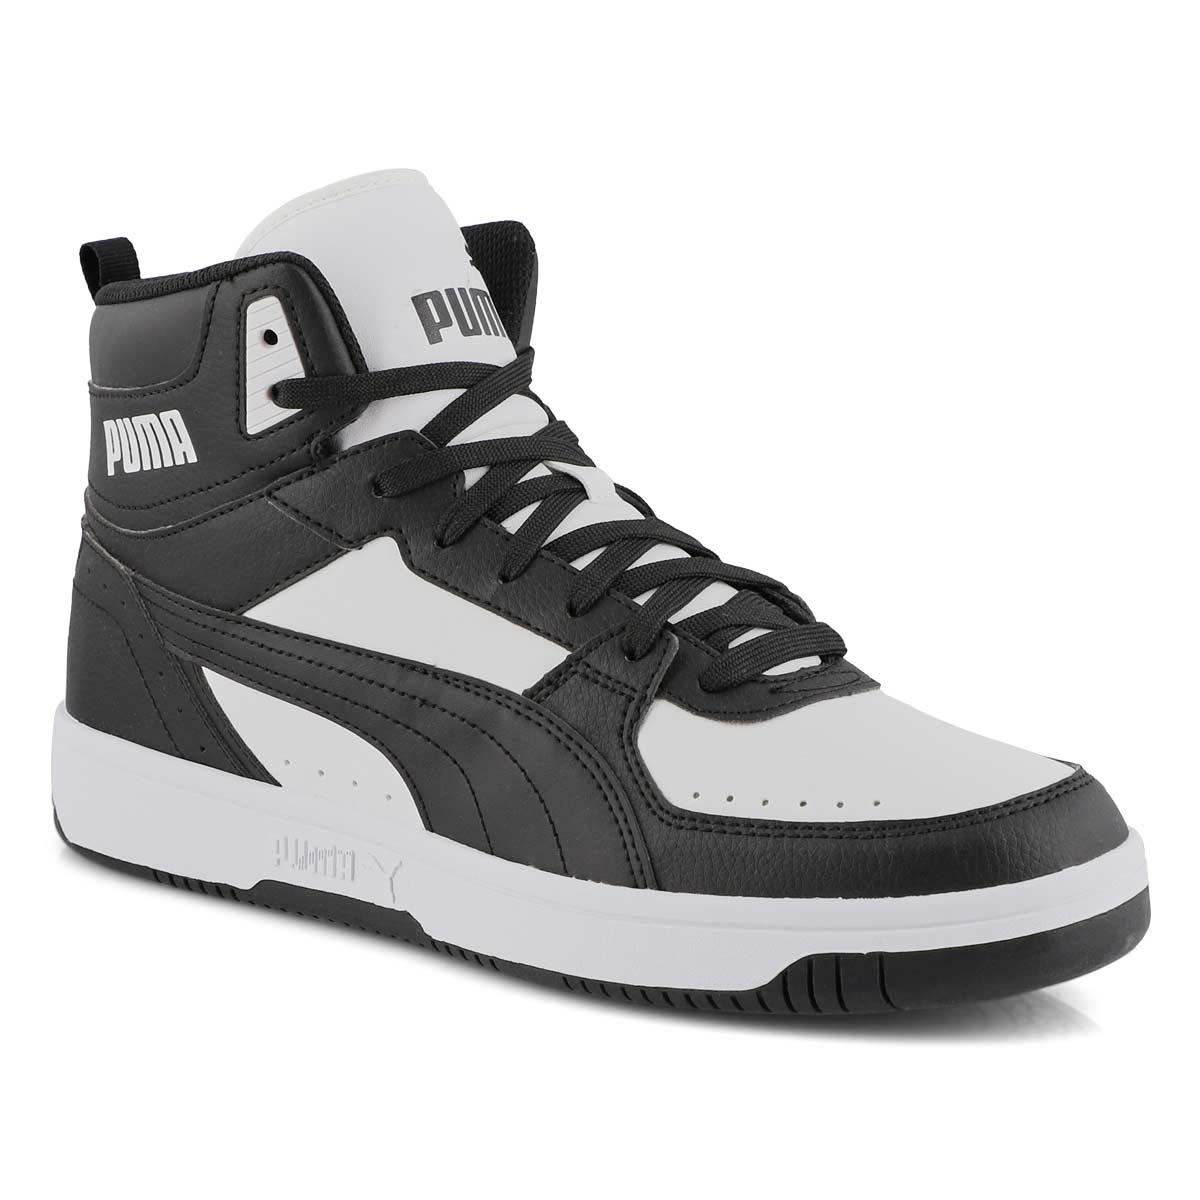 Puma Men's Rebound Joy Sneaker - Limestone Wh | SoftMoc.com